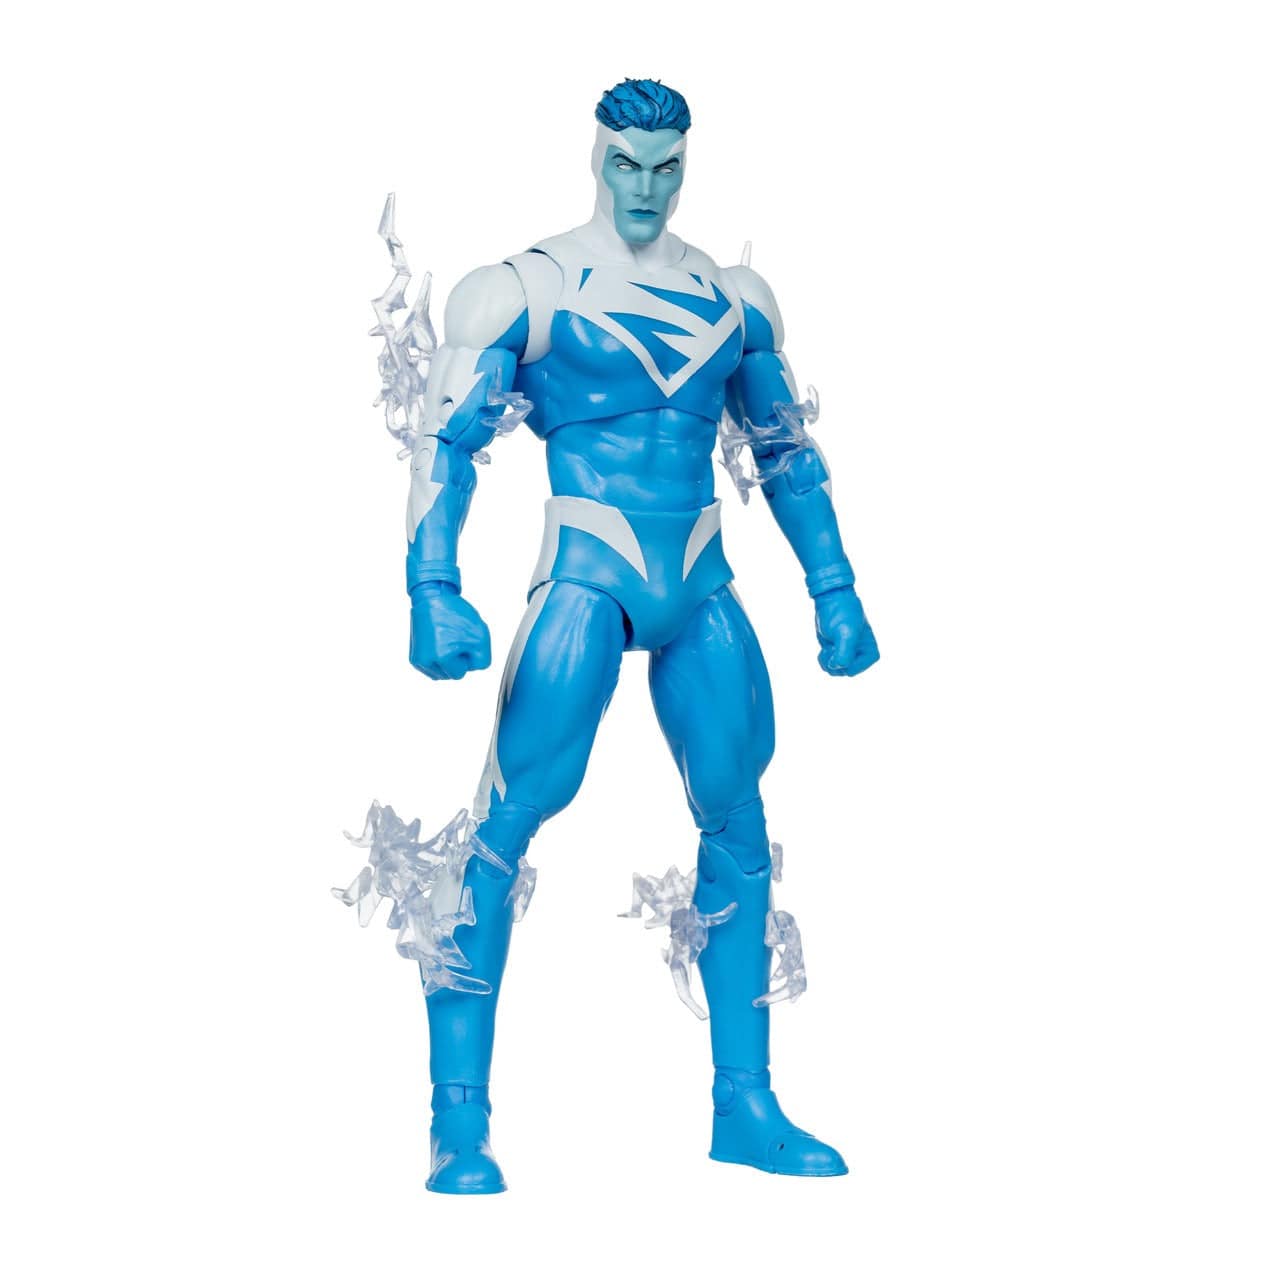 McFarlane Toys DC Multiverse JLA Superman (Plastic Man Build-A-Figure)